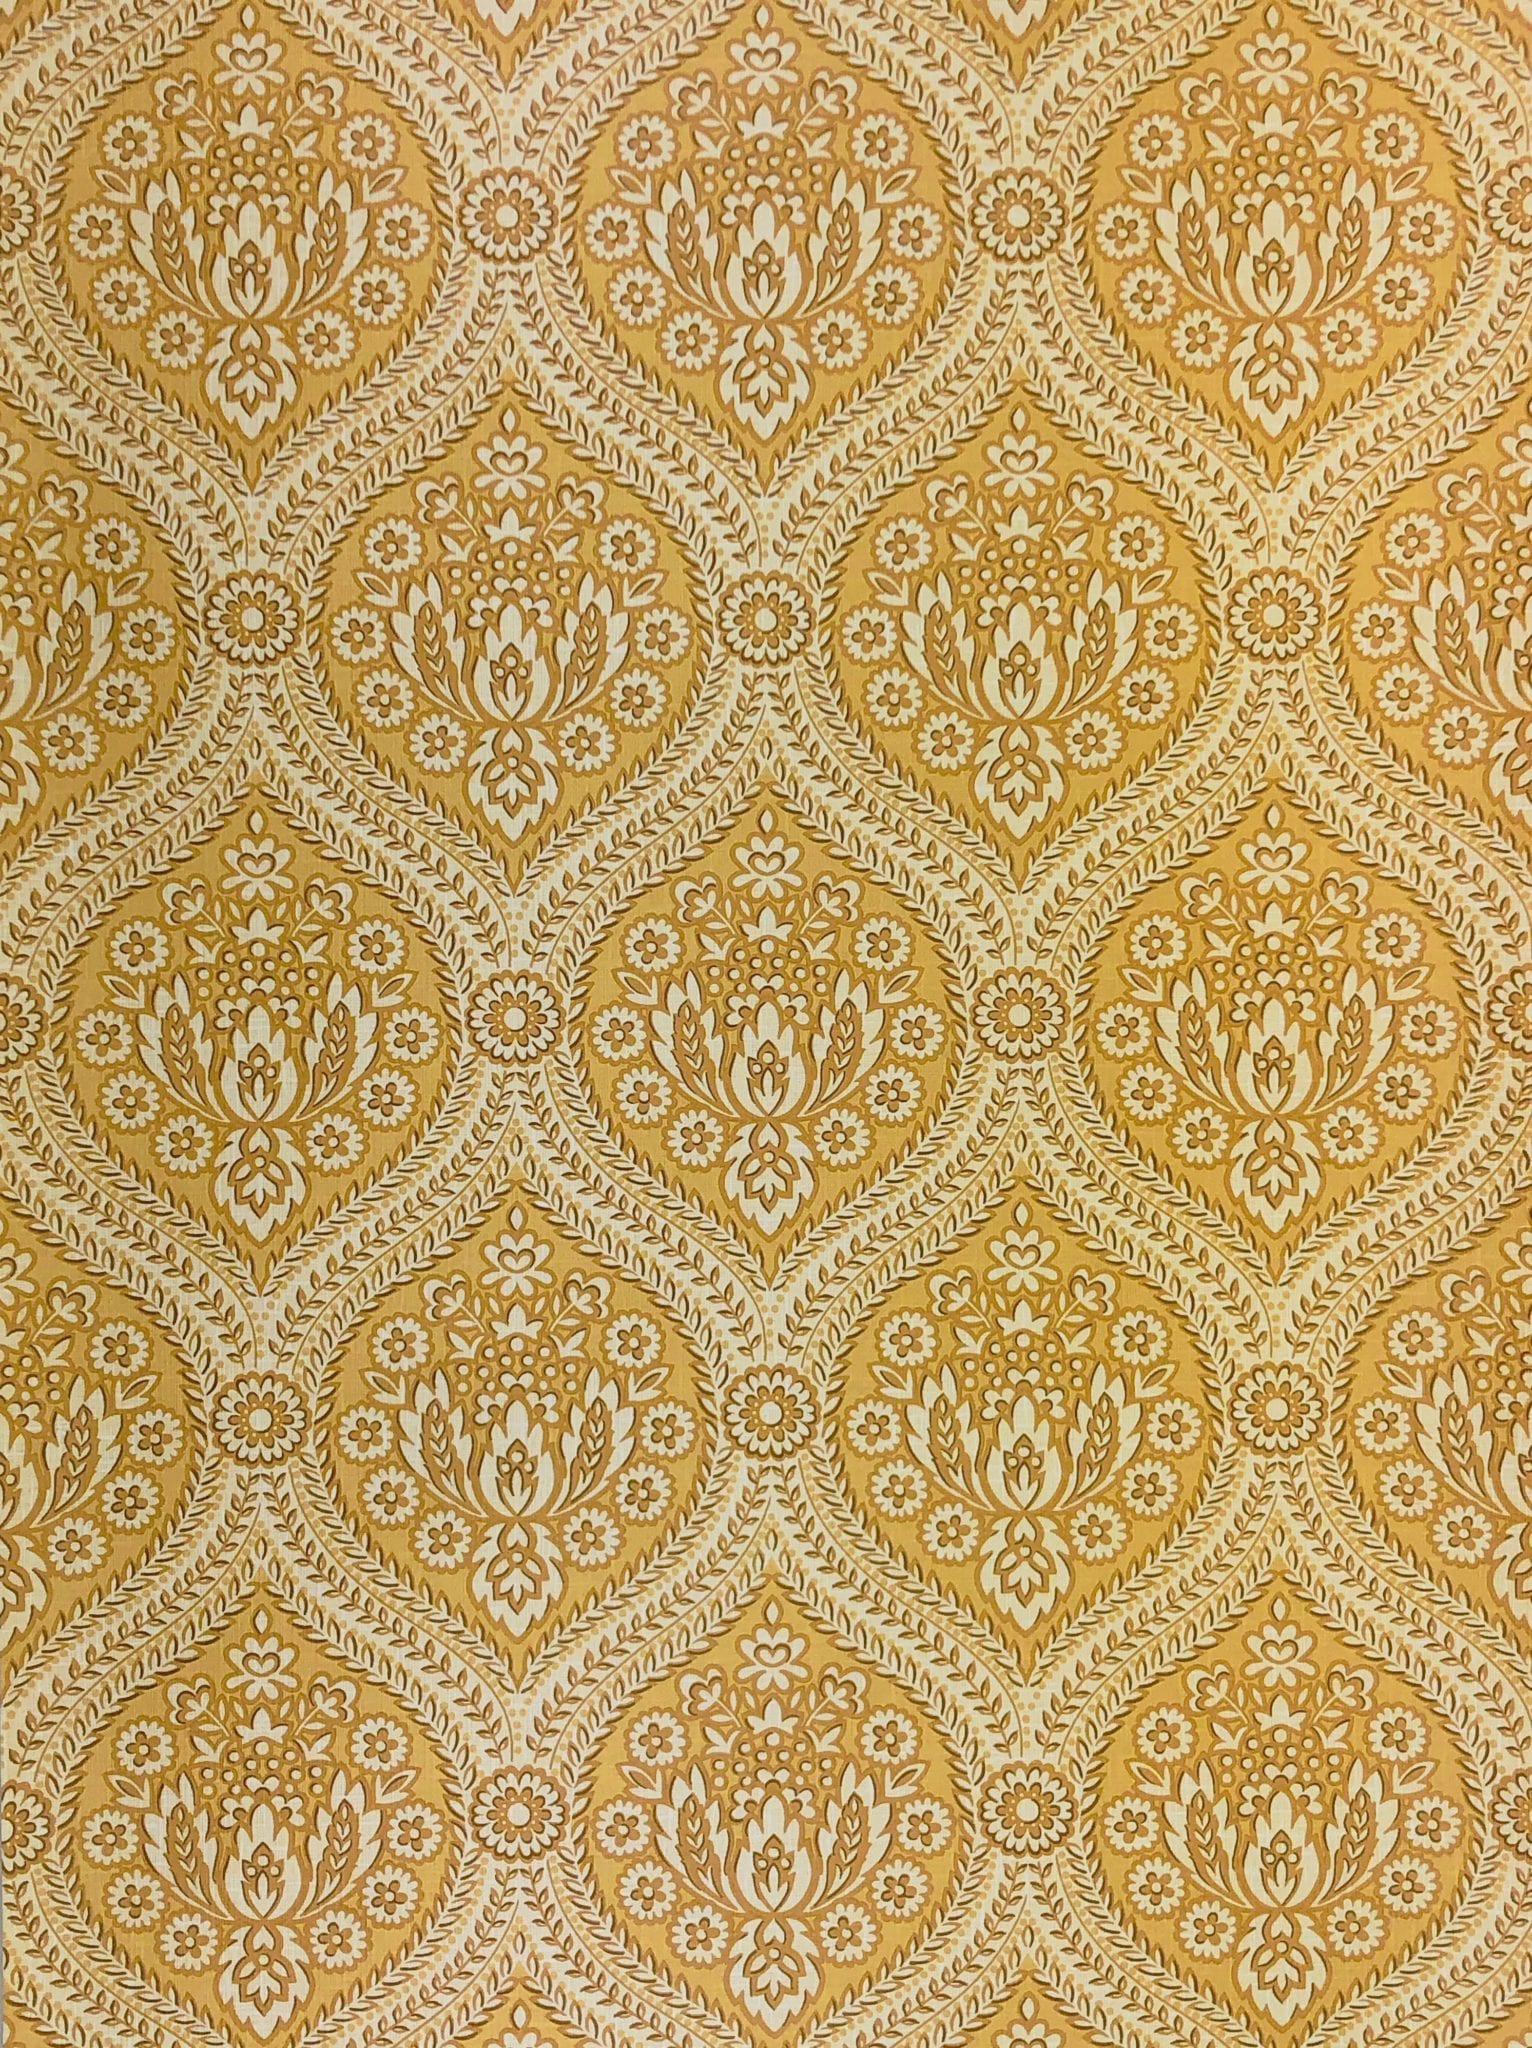 60s wallpaper,pattern,yellow,motif,wallpaper,design